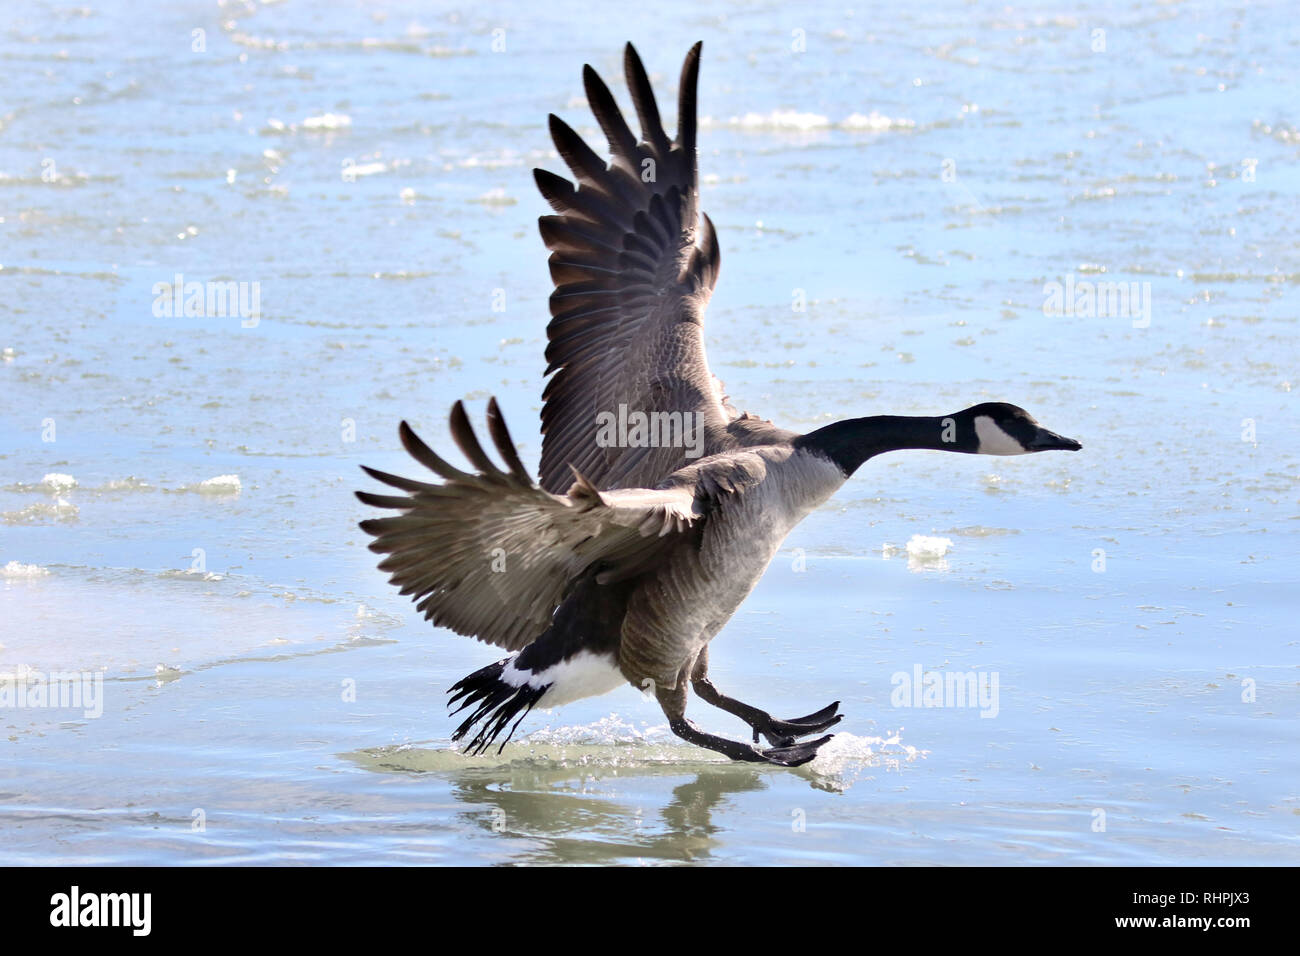 Canada geese on freezing winter lake Stock Photo